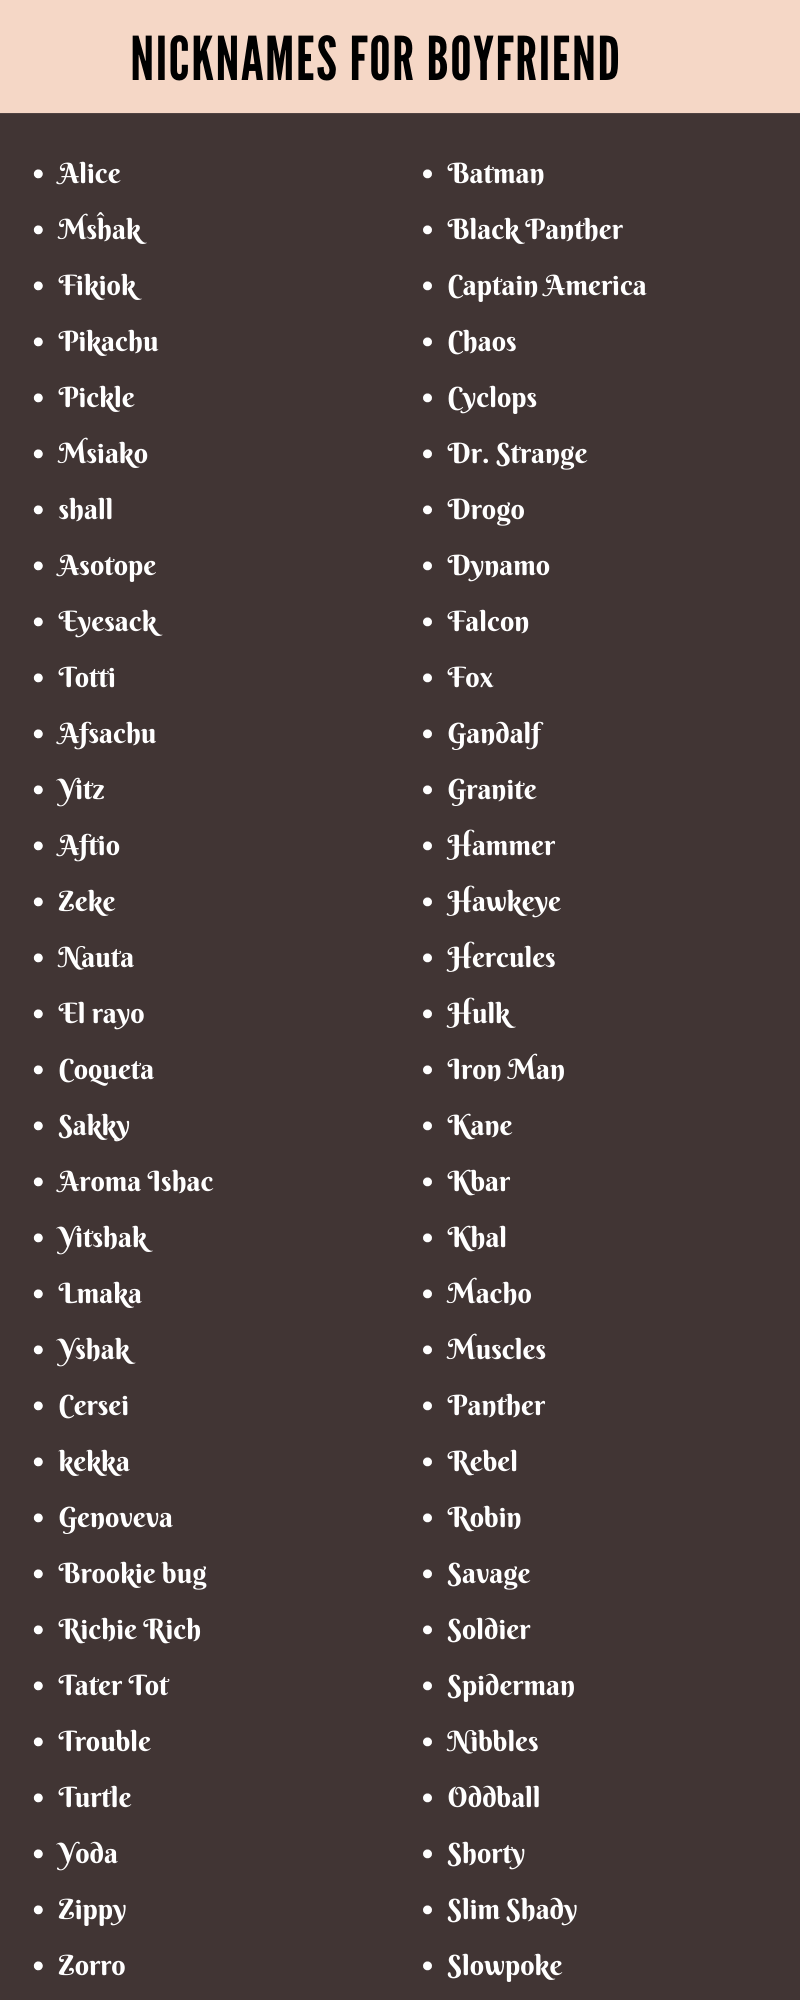 nicknames for boyfriends